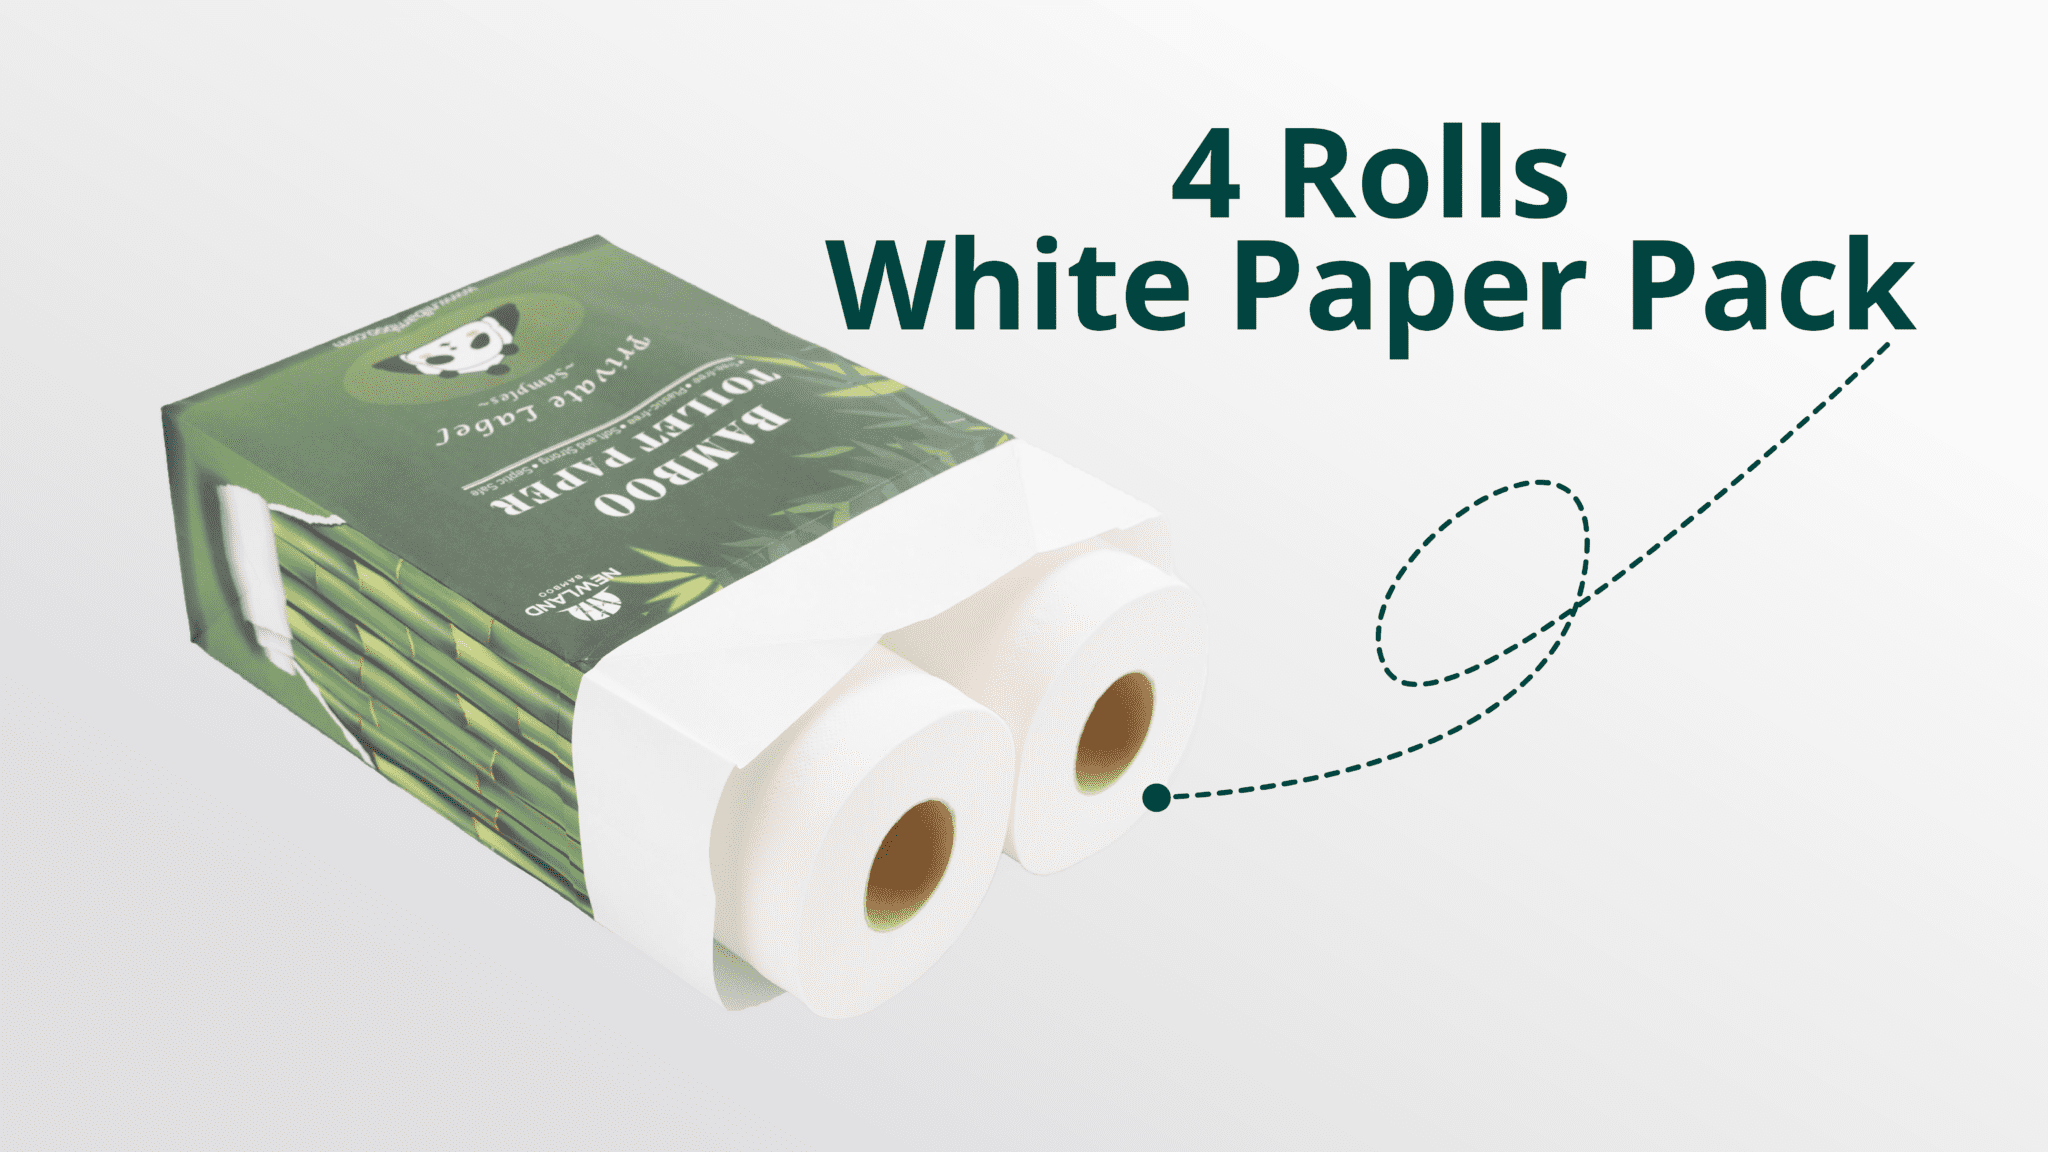 4 rolls white paper pack toilet paper